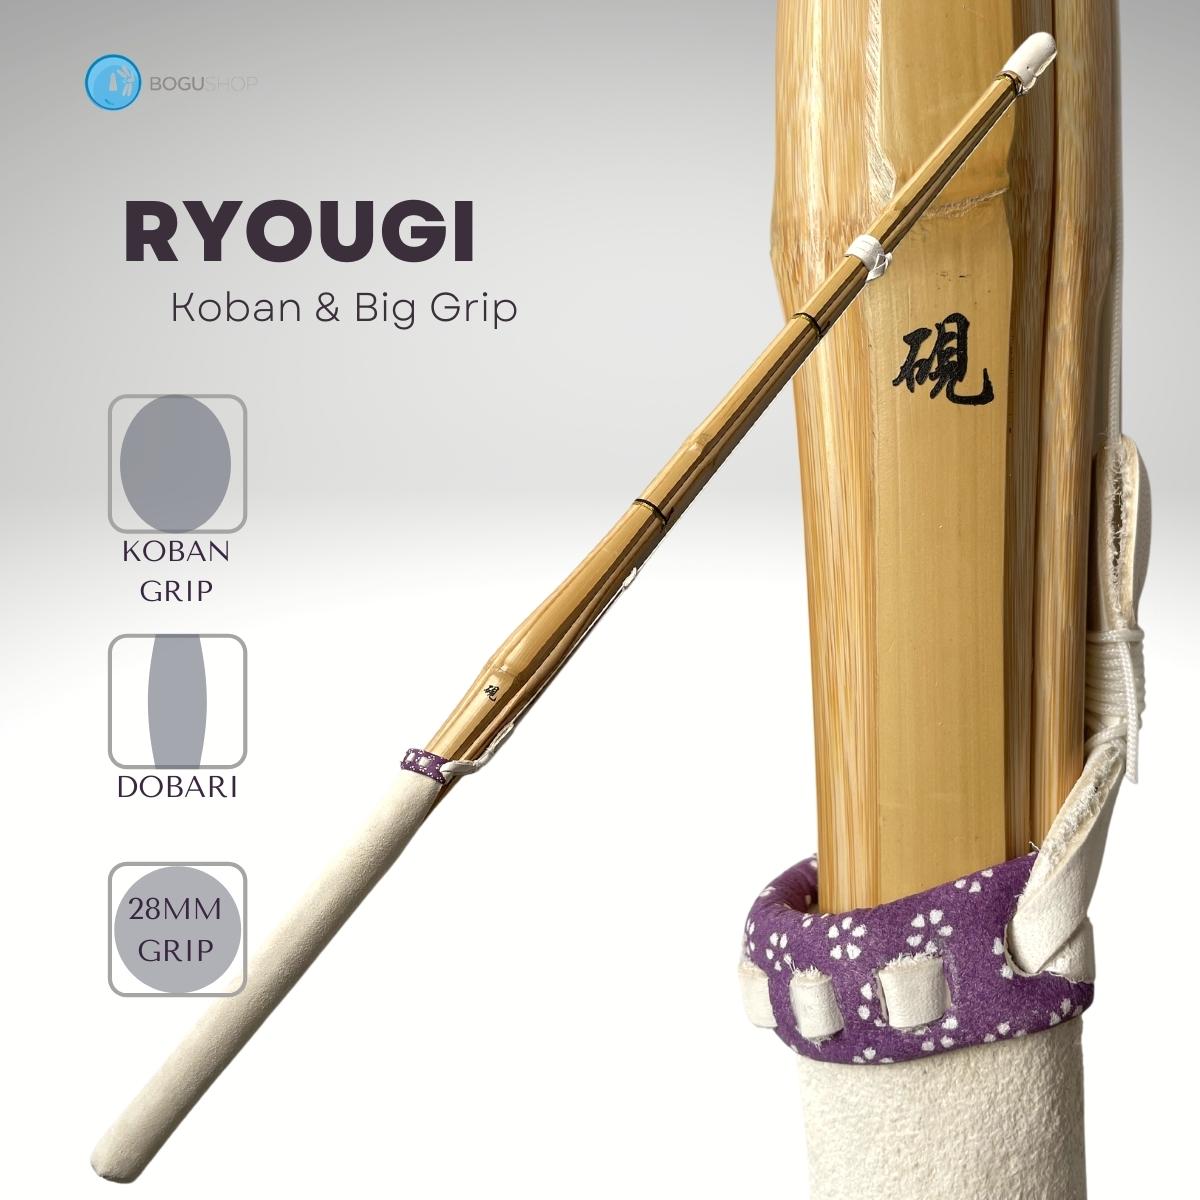 [Keichiku Bamboo] "Ryougi" Doubari style with Koban (Oval) grip Shinai